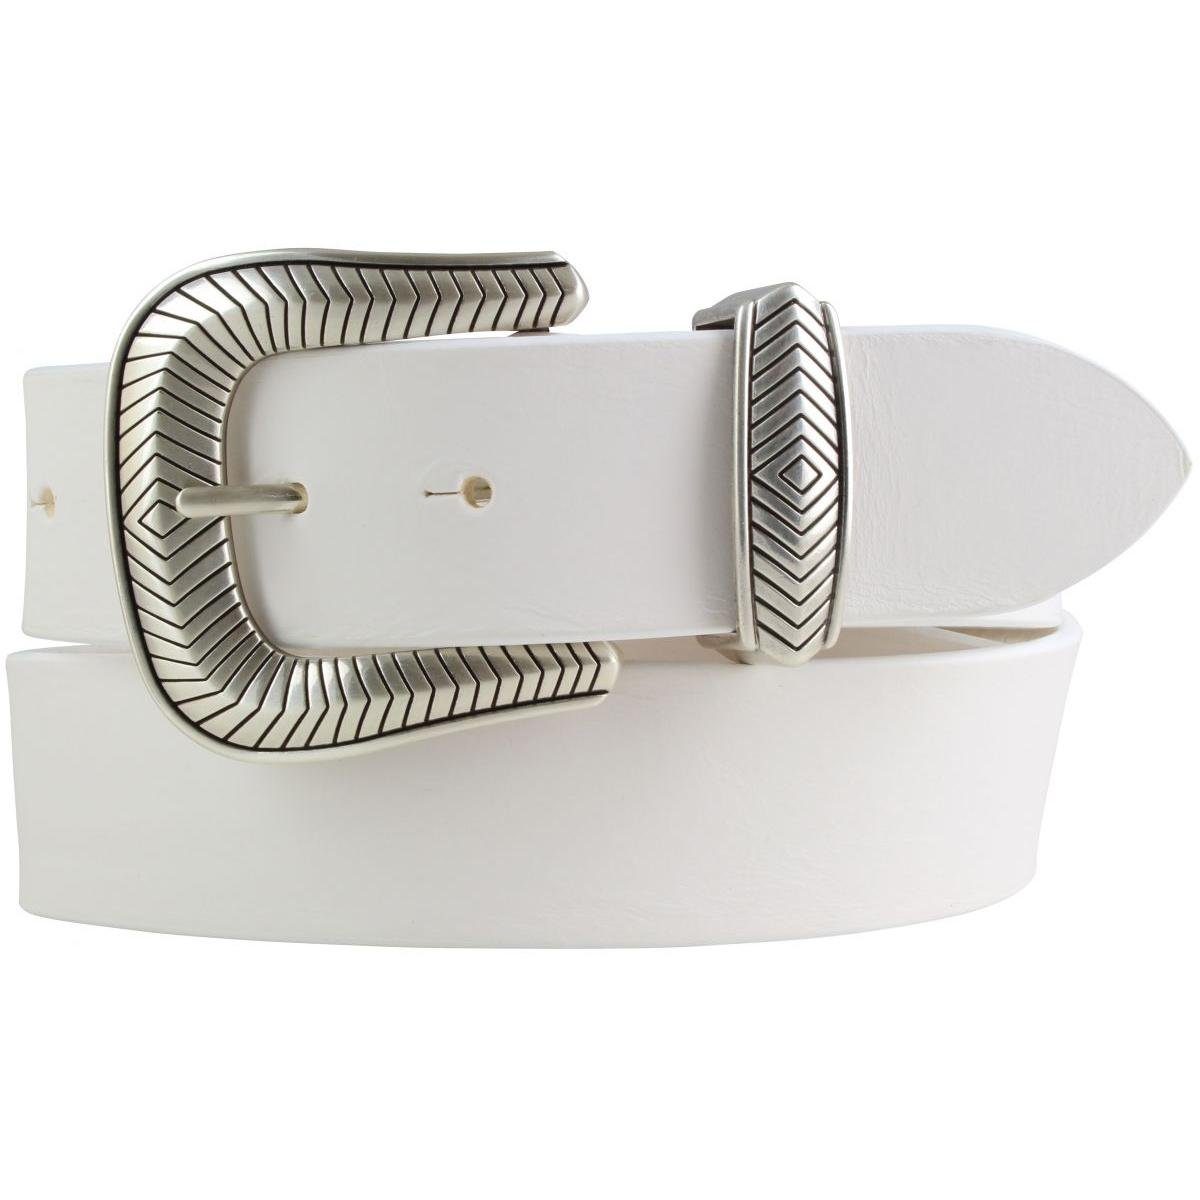 Designer-Gürtel - Vollrindleder Metall-Schlaufe aus Jeans-Gür Weiß, BELTINGER cm mit Ledergürtel Silber 4